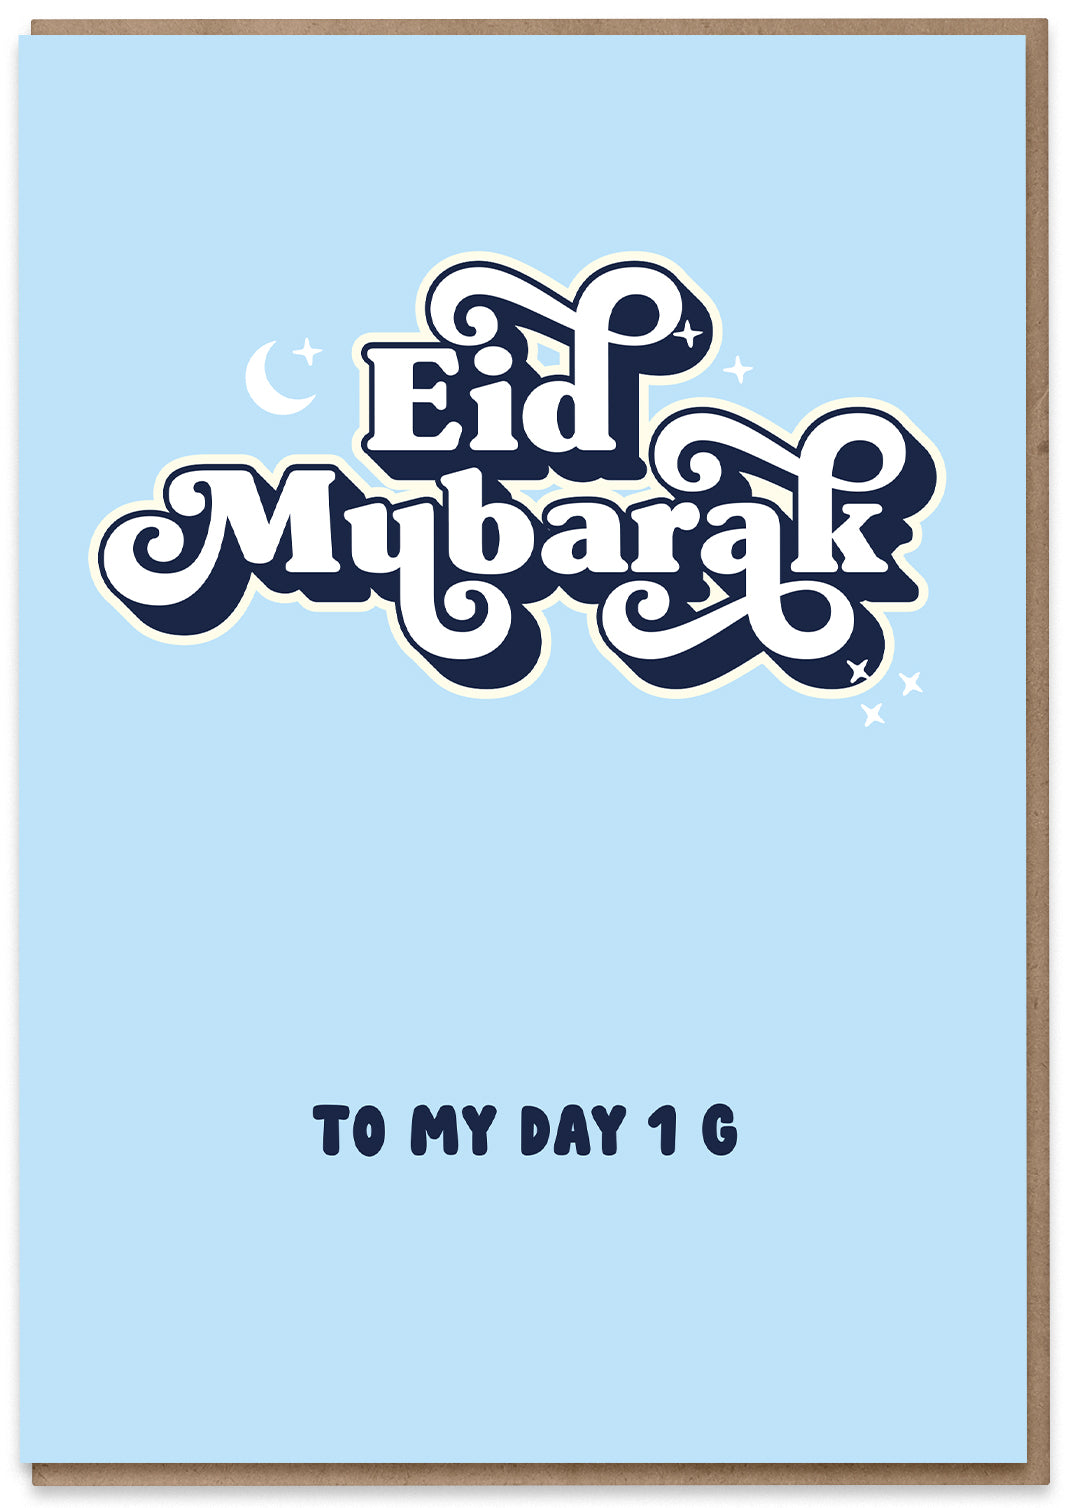 Eid Mubarak Day 1 G